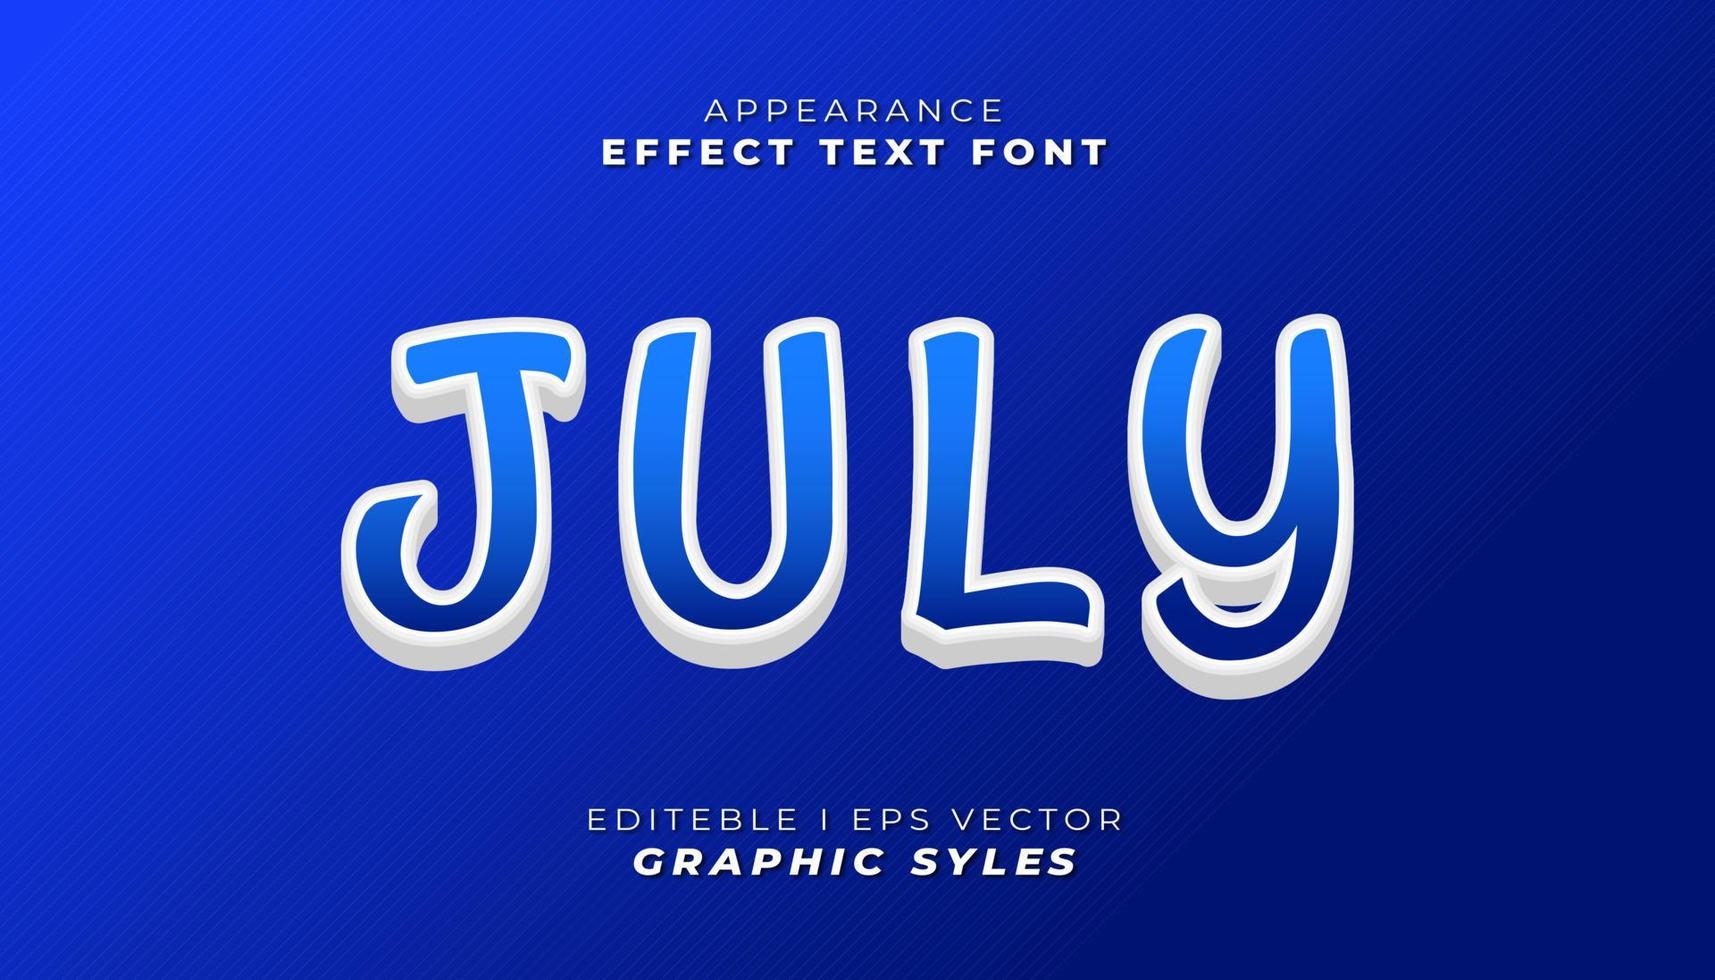 teksteffect lettertype 3D-kleur. vector